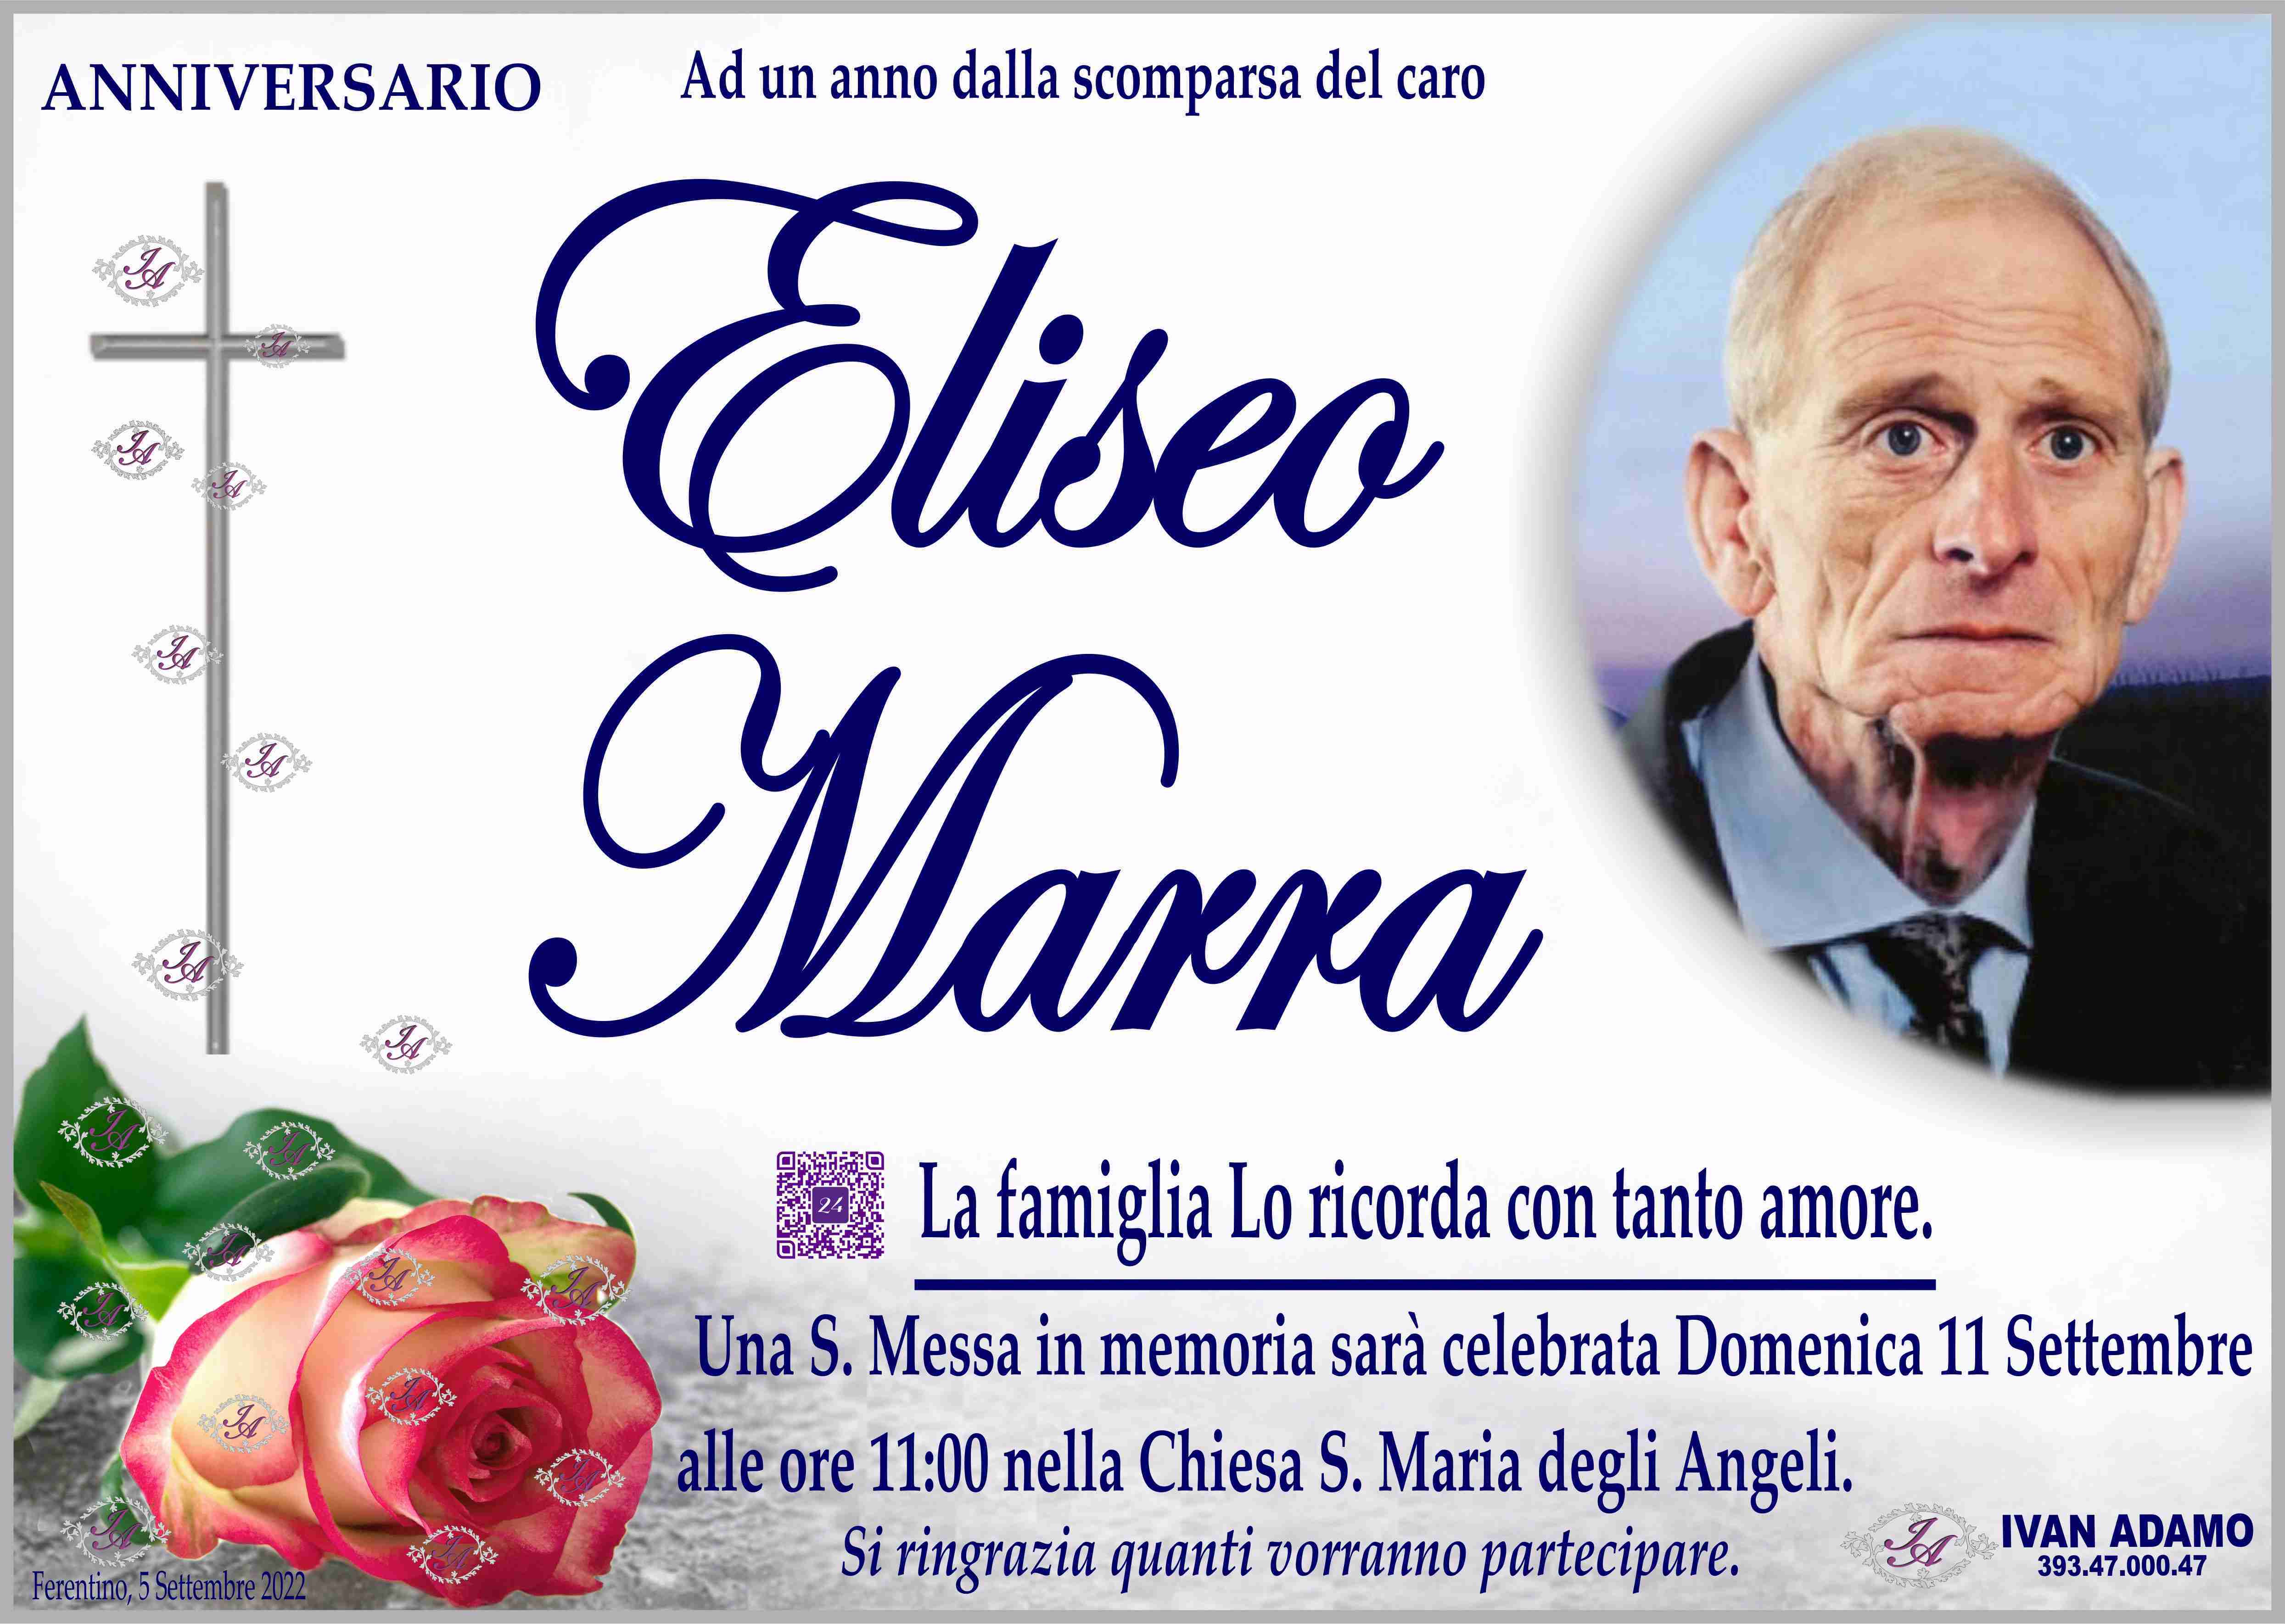 Eliseo Marra